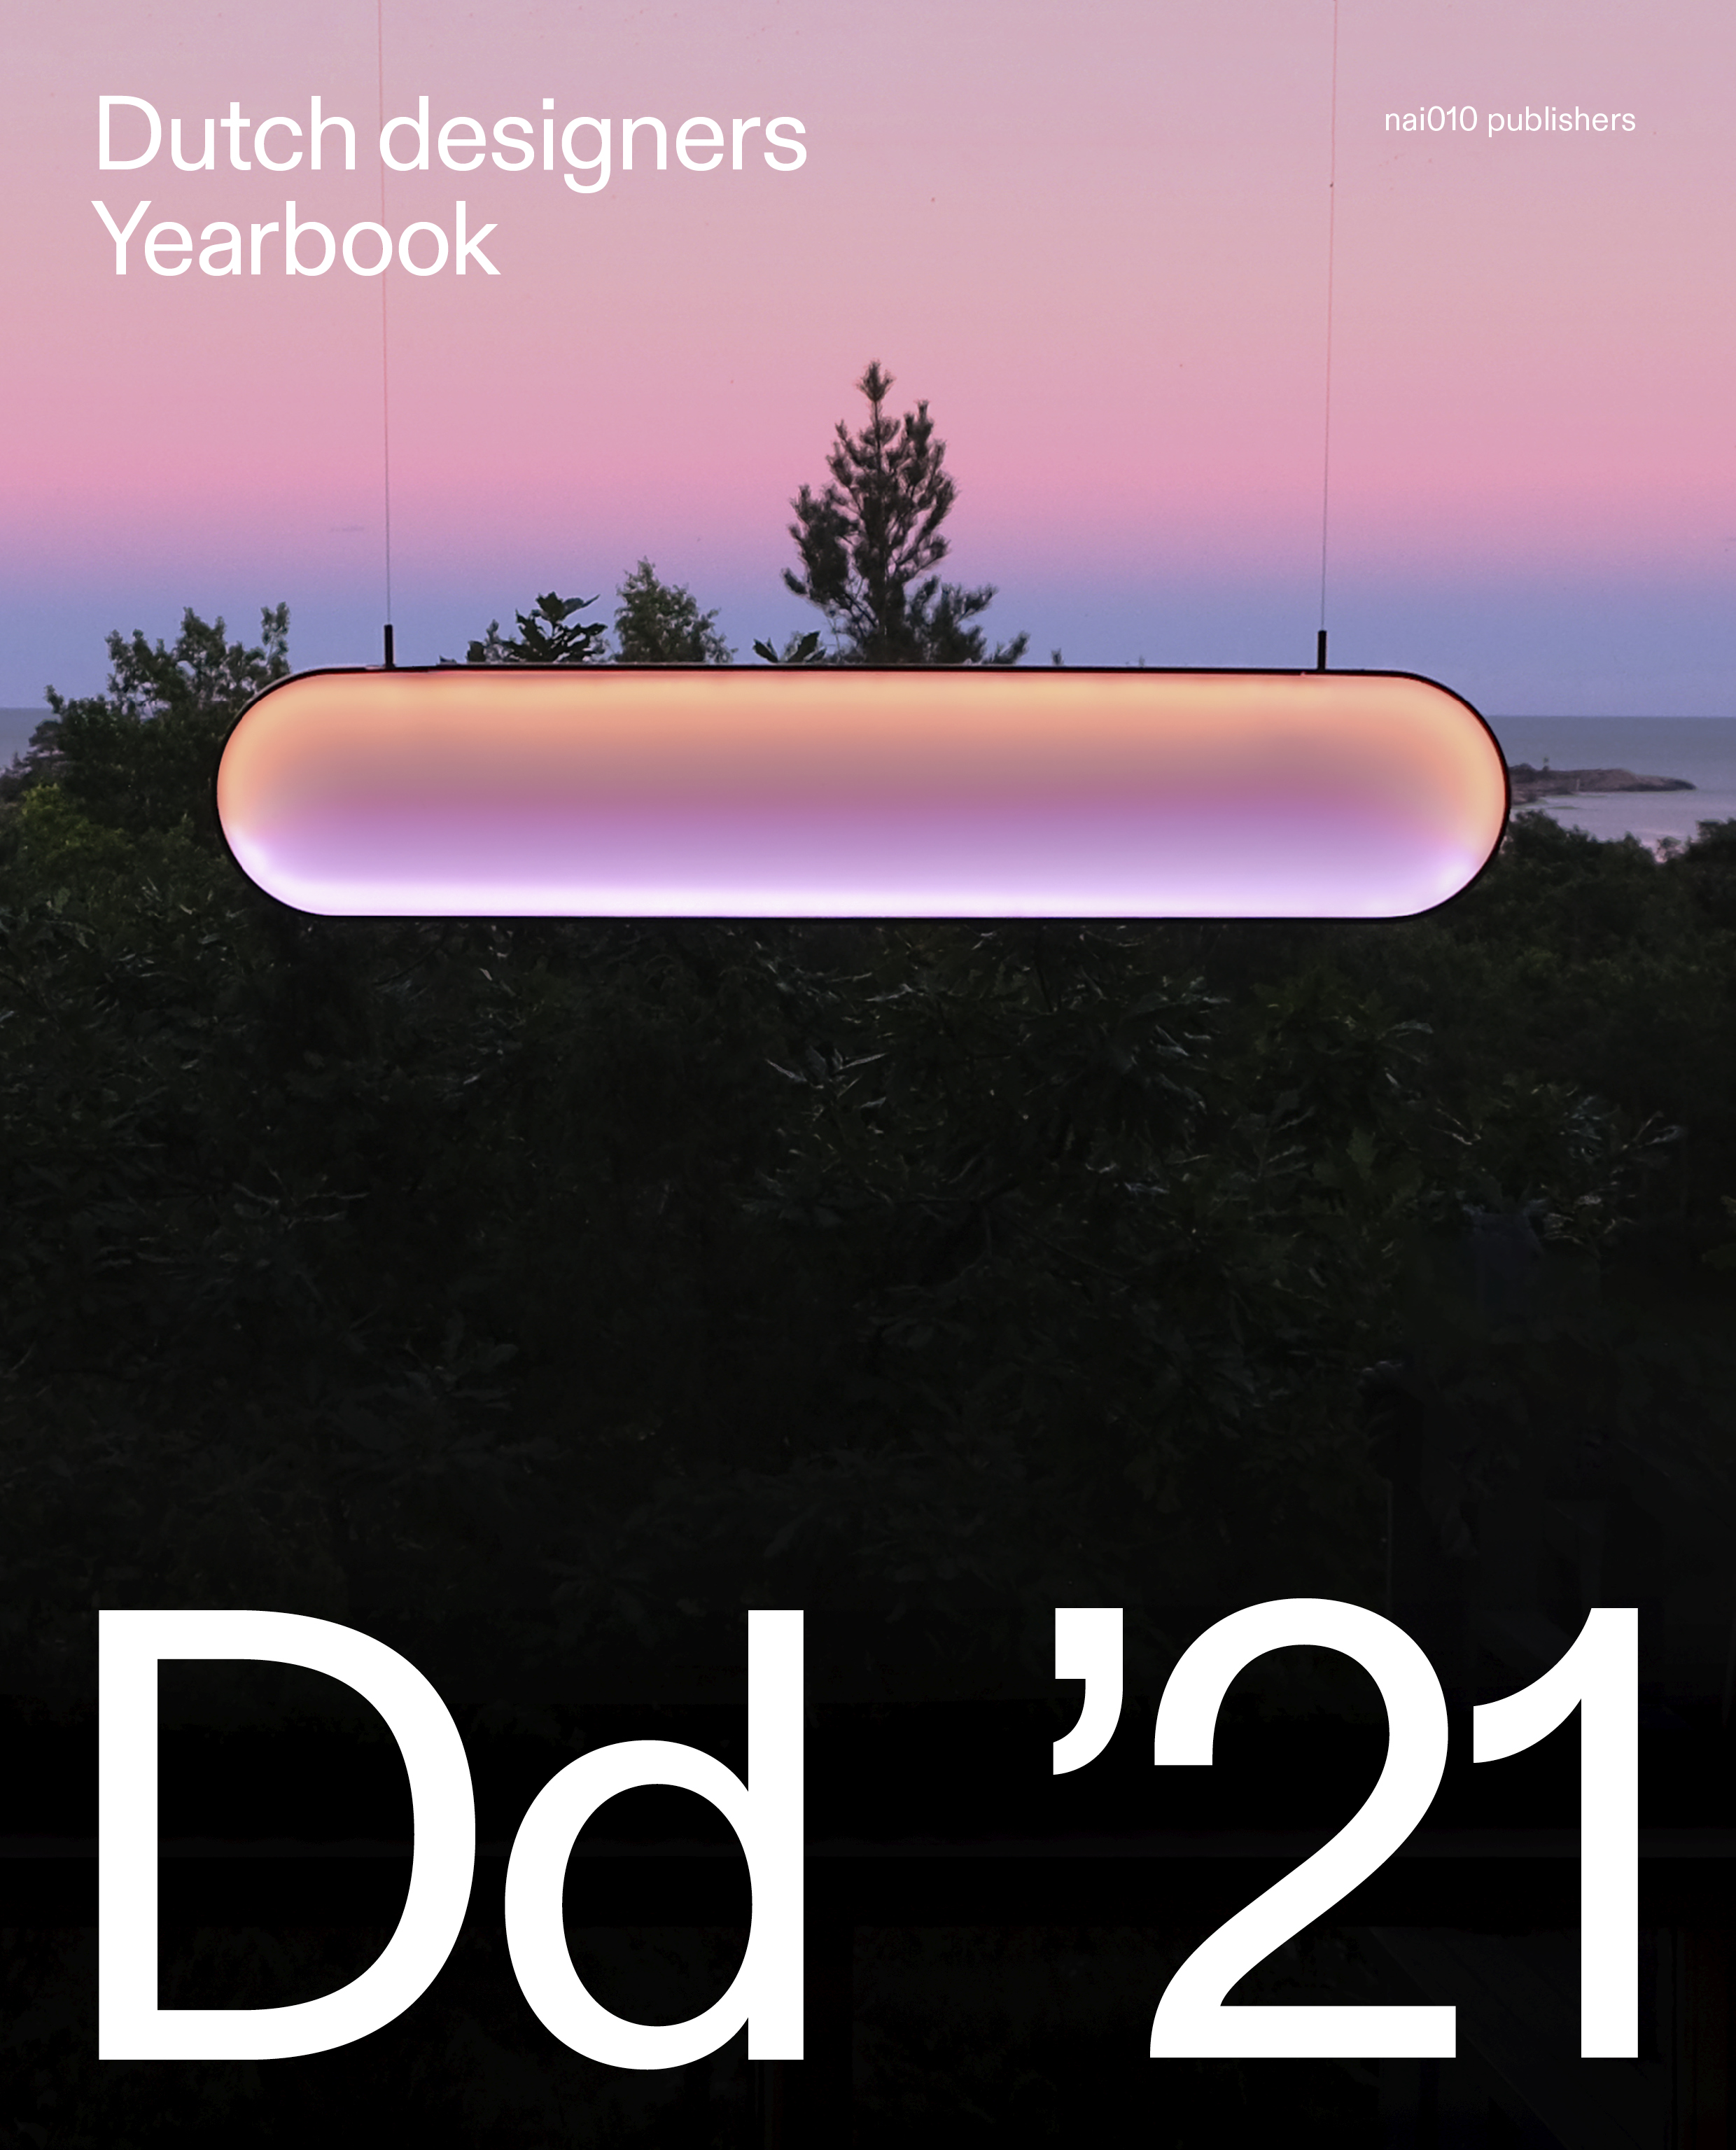 Dutch designers Yearbook 2021